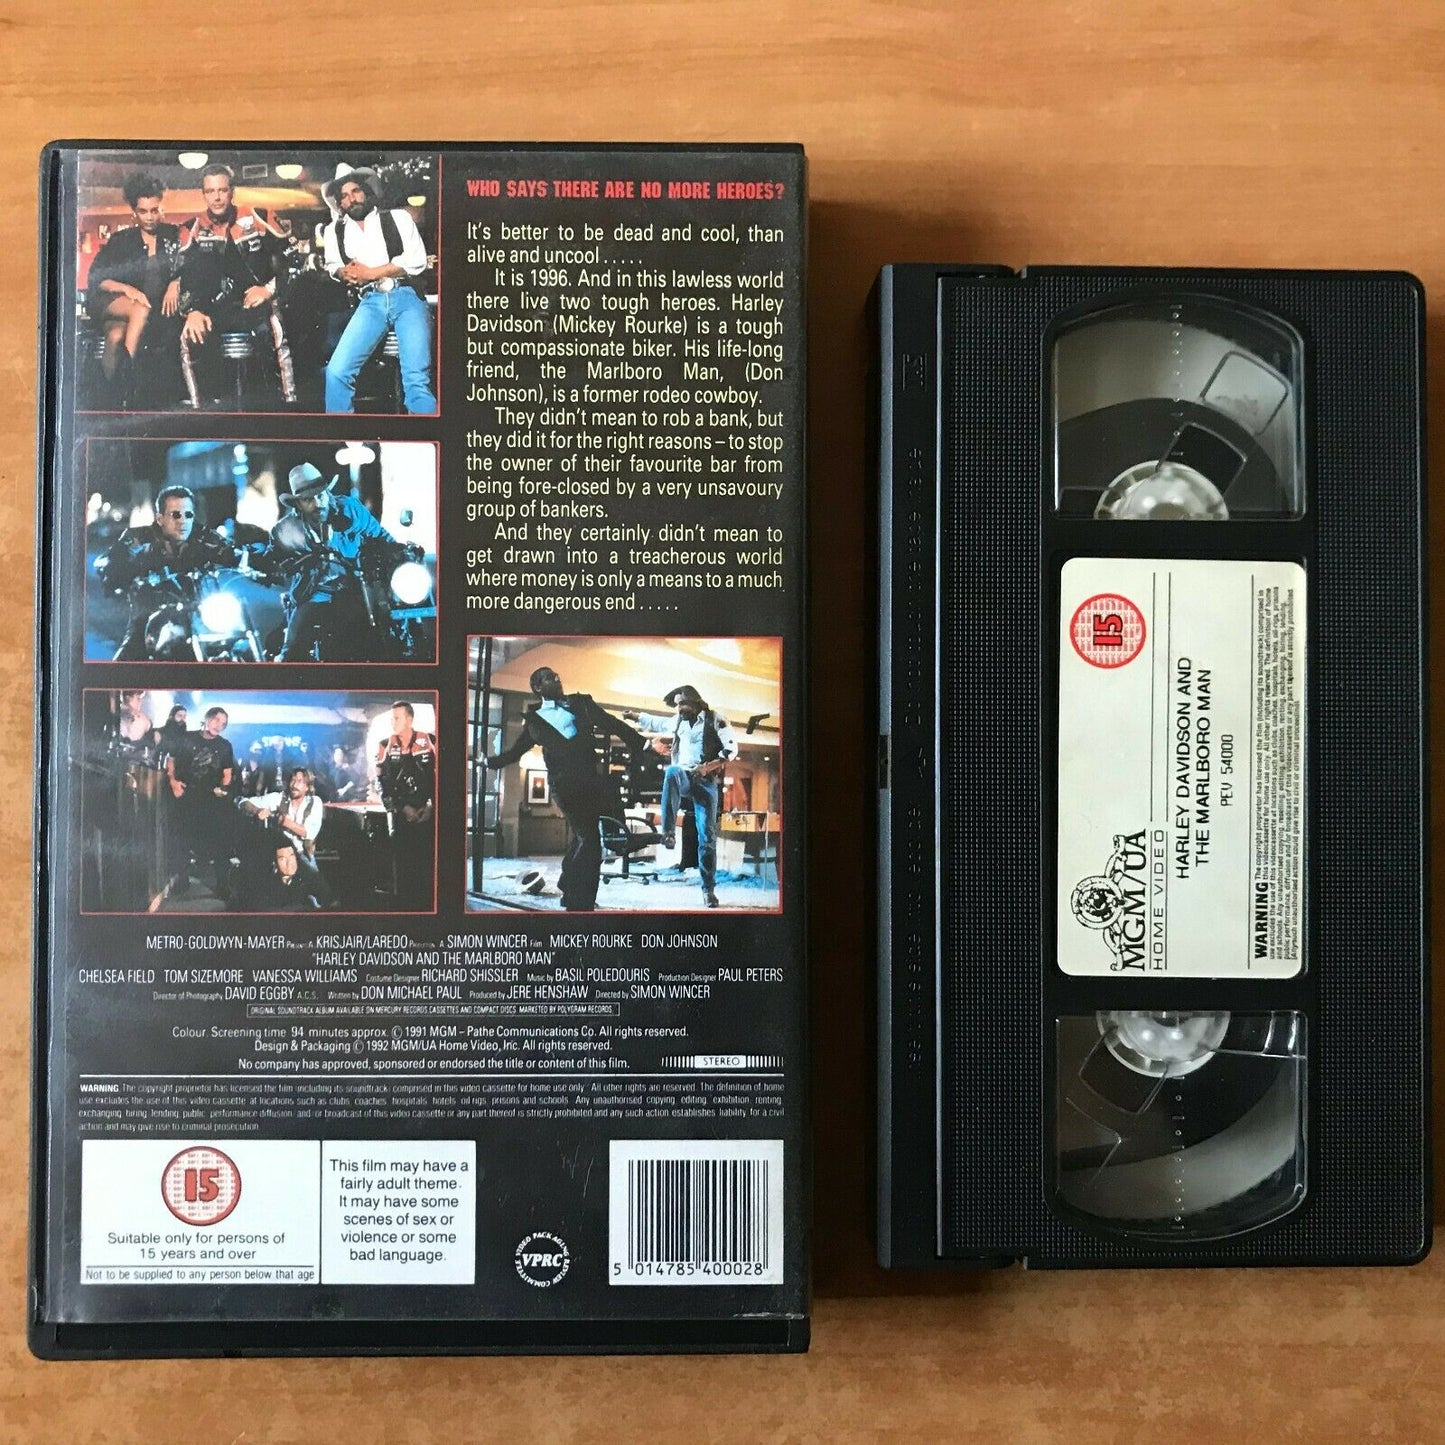 Harley Davidson And Malboro Man (1991): Action [Big Box] Rourke / Johnson - VHS-